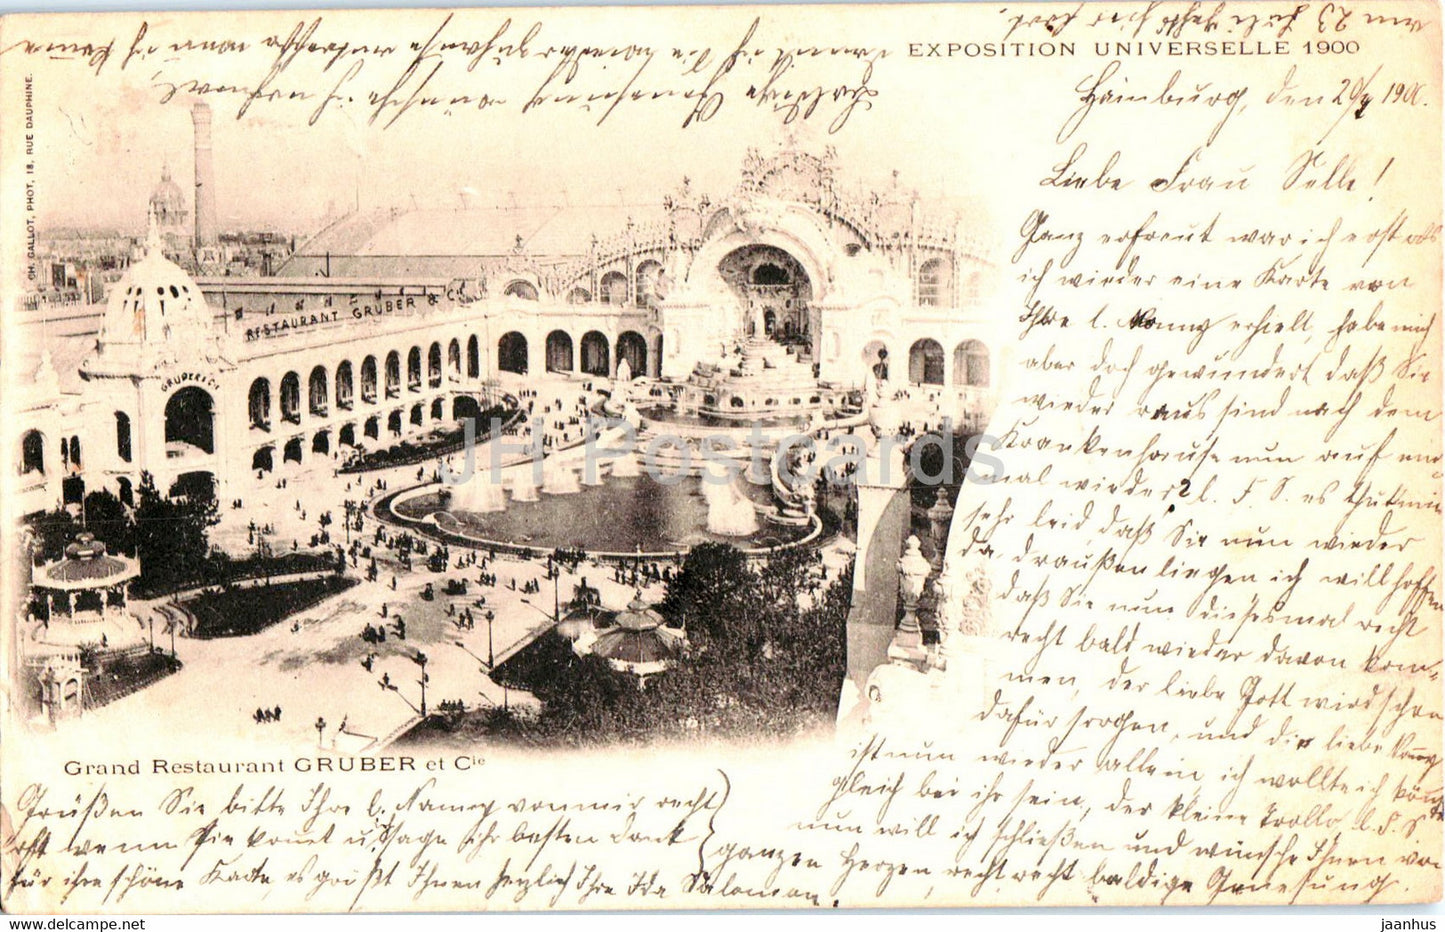 Paris - Exposition Universelle 1900  - Grand Restaurant  Gruber et Cie - old postcard - 1900 - France - used - JH Postcards